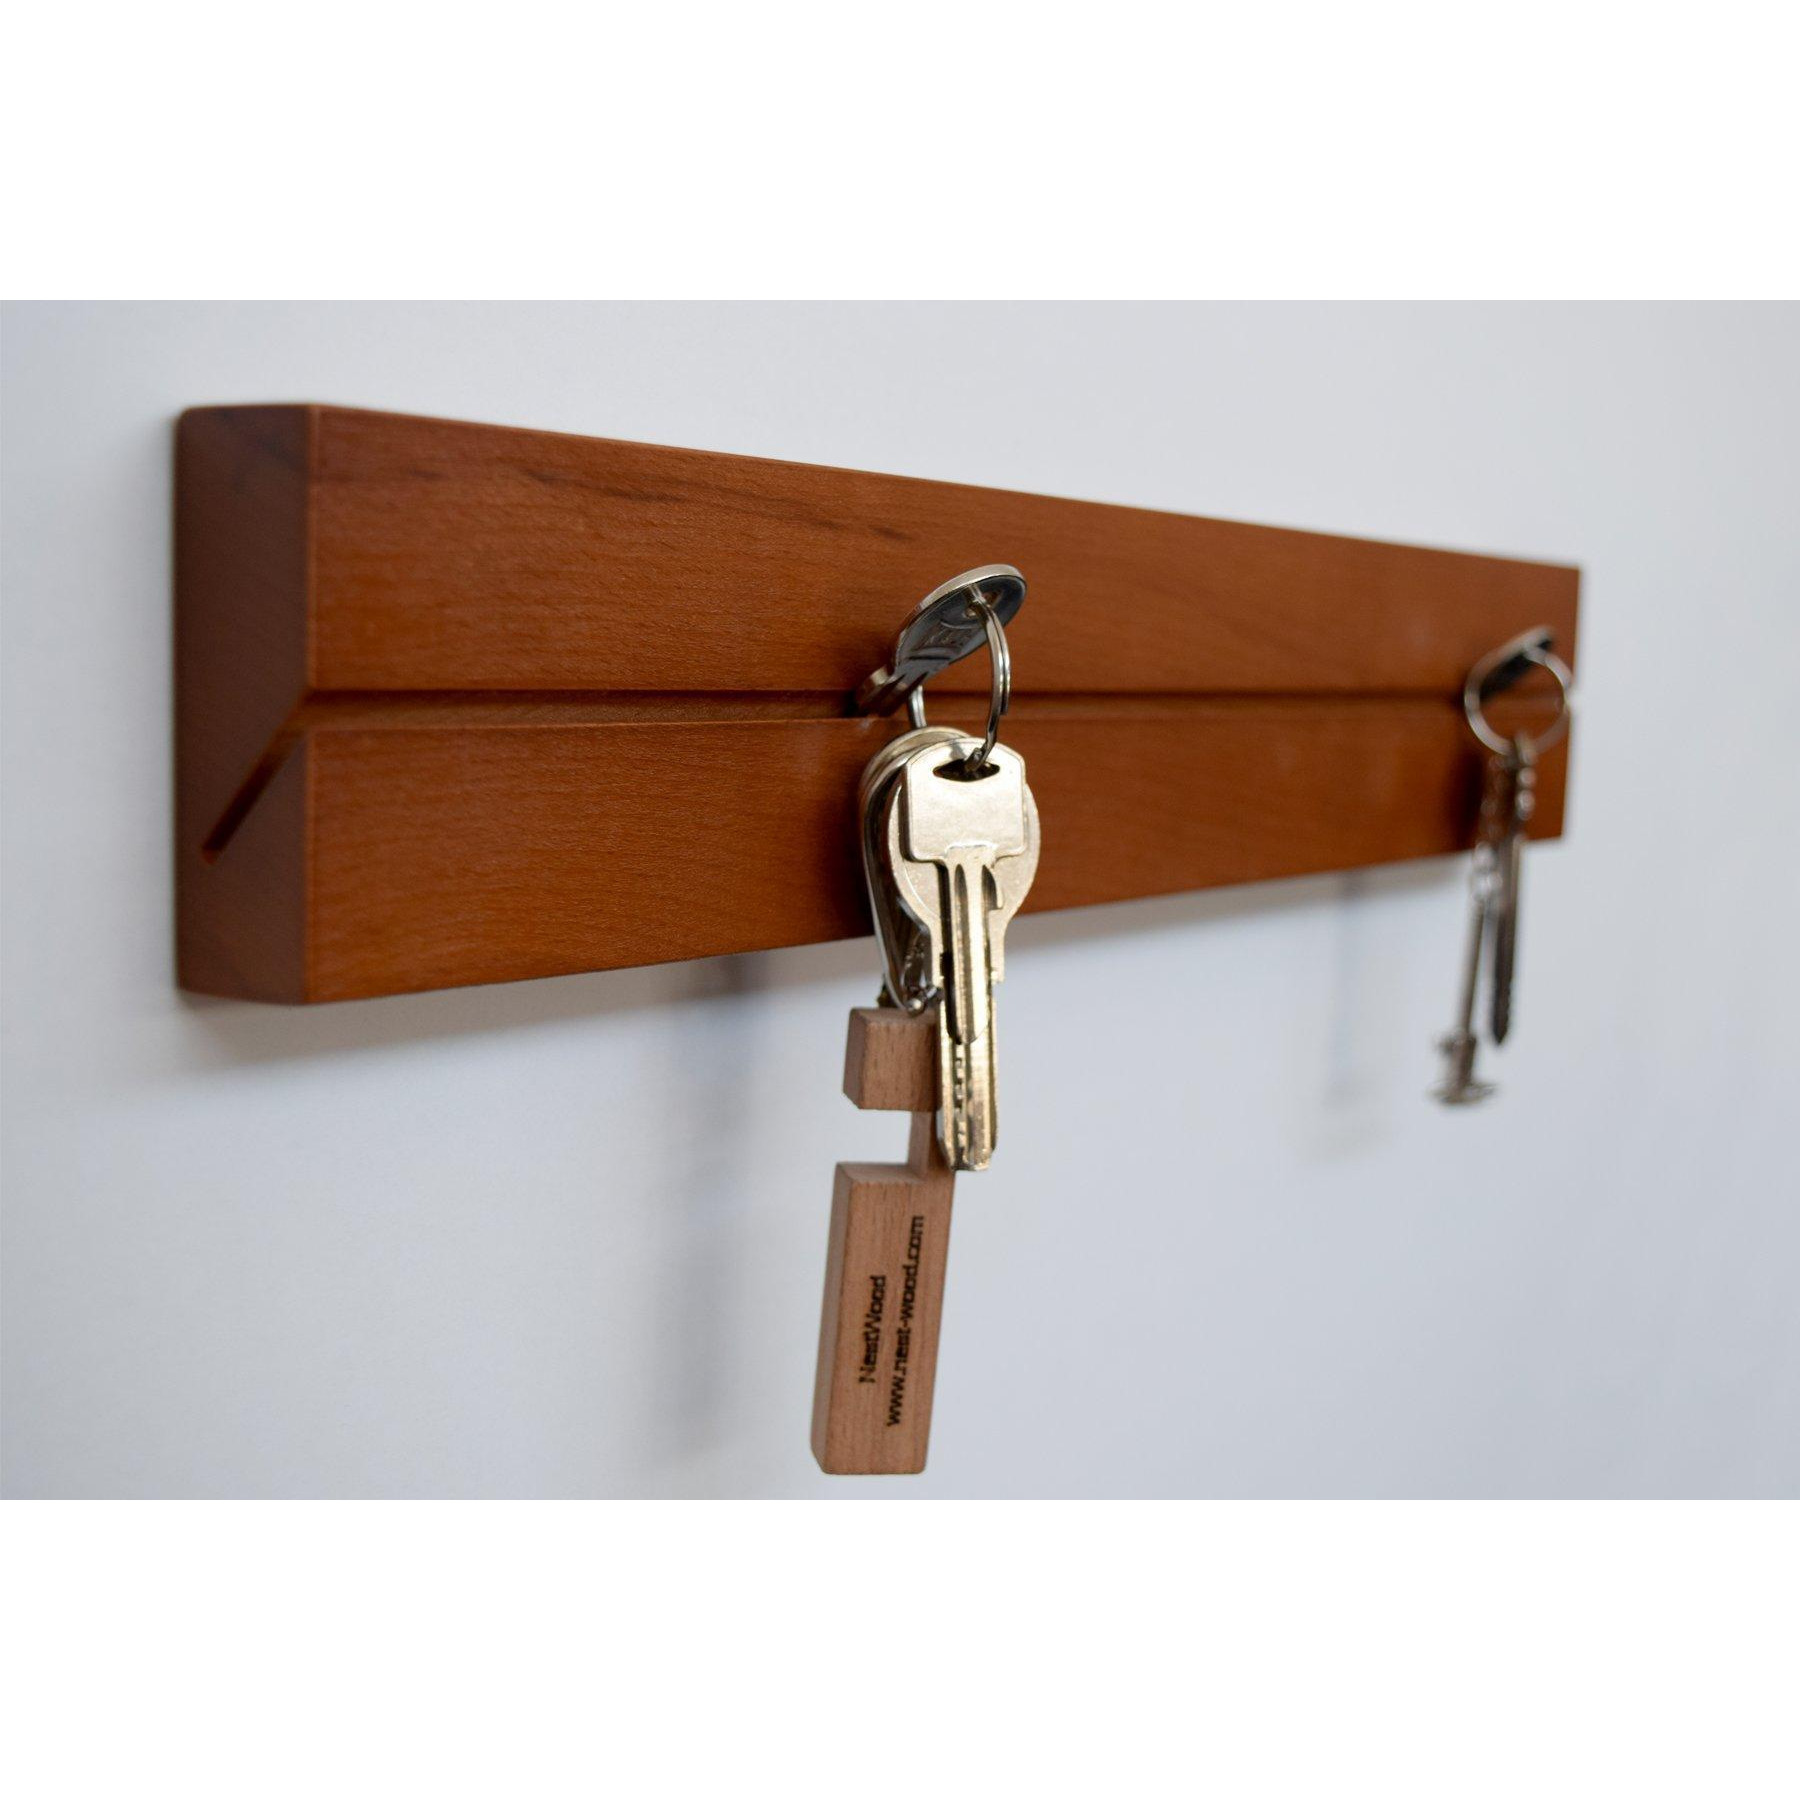 Cleppa Handmade Wooden Wall Mounted Key Holder Key Organizer (40 cm) - image 1